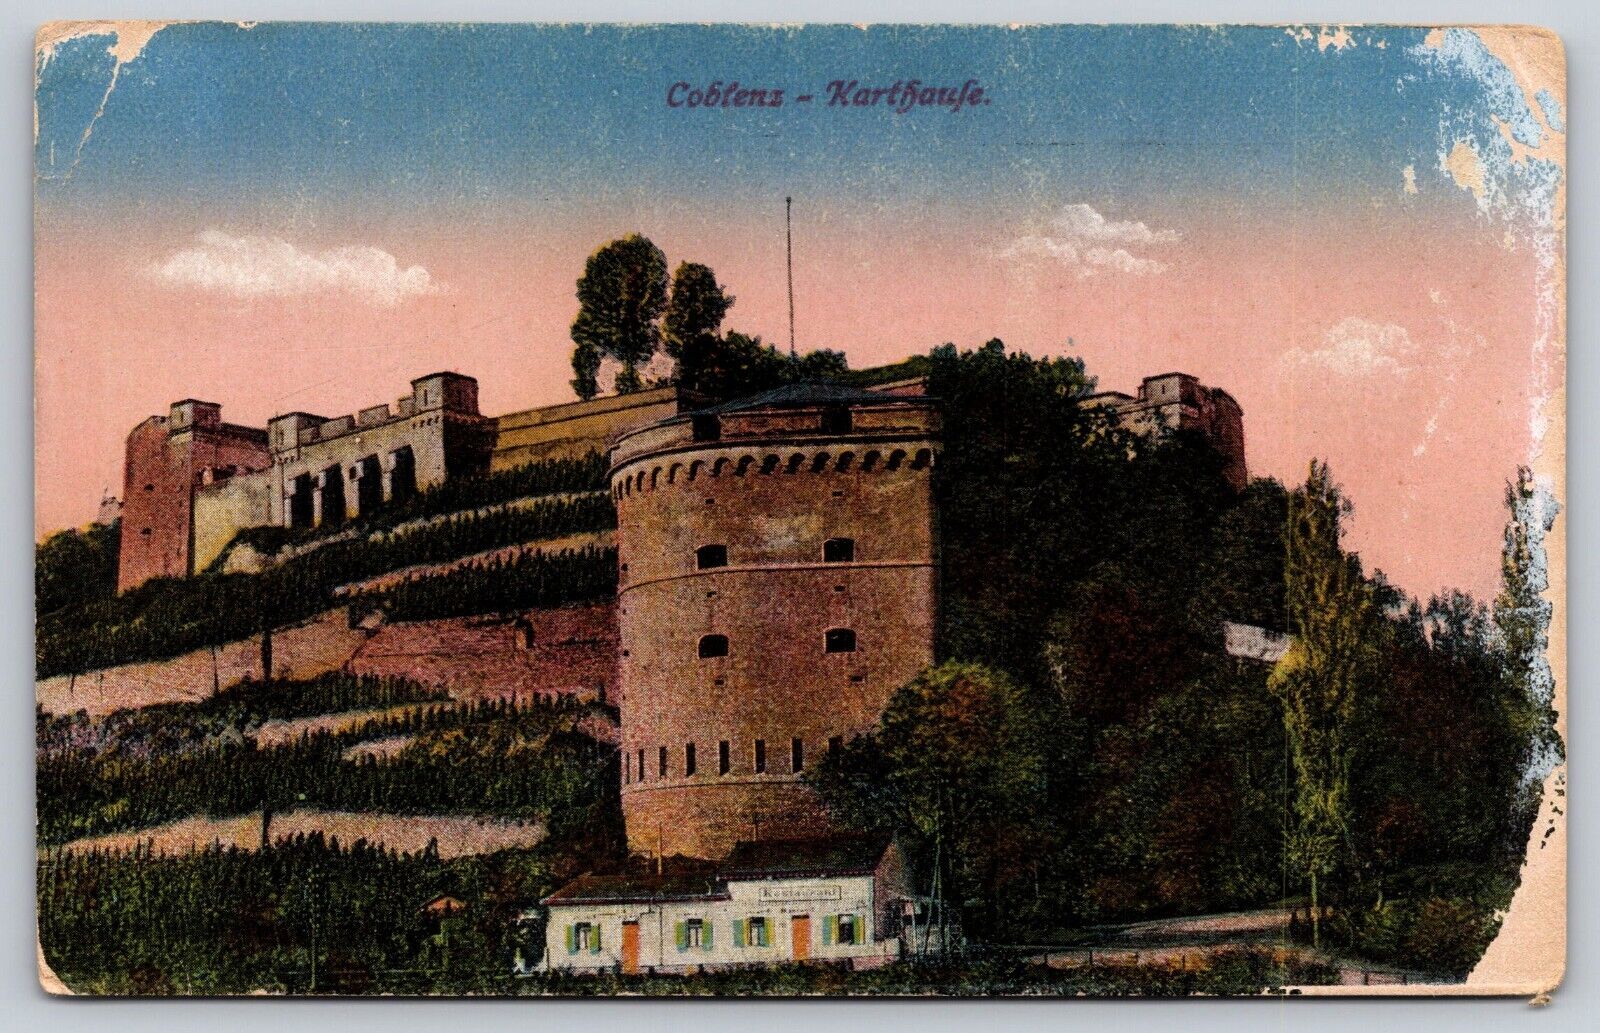 Postcard Coblenz  Karthaufe